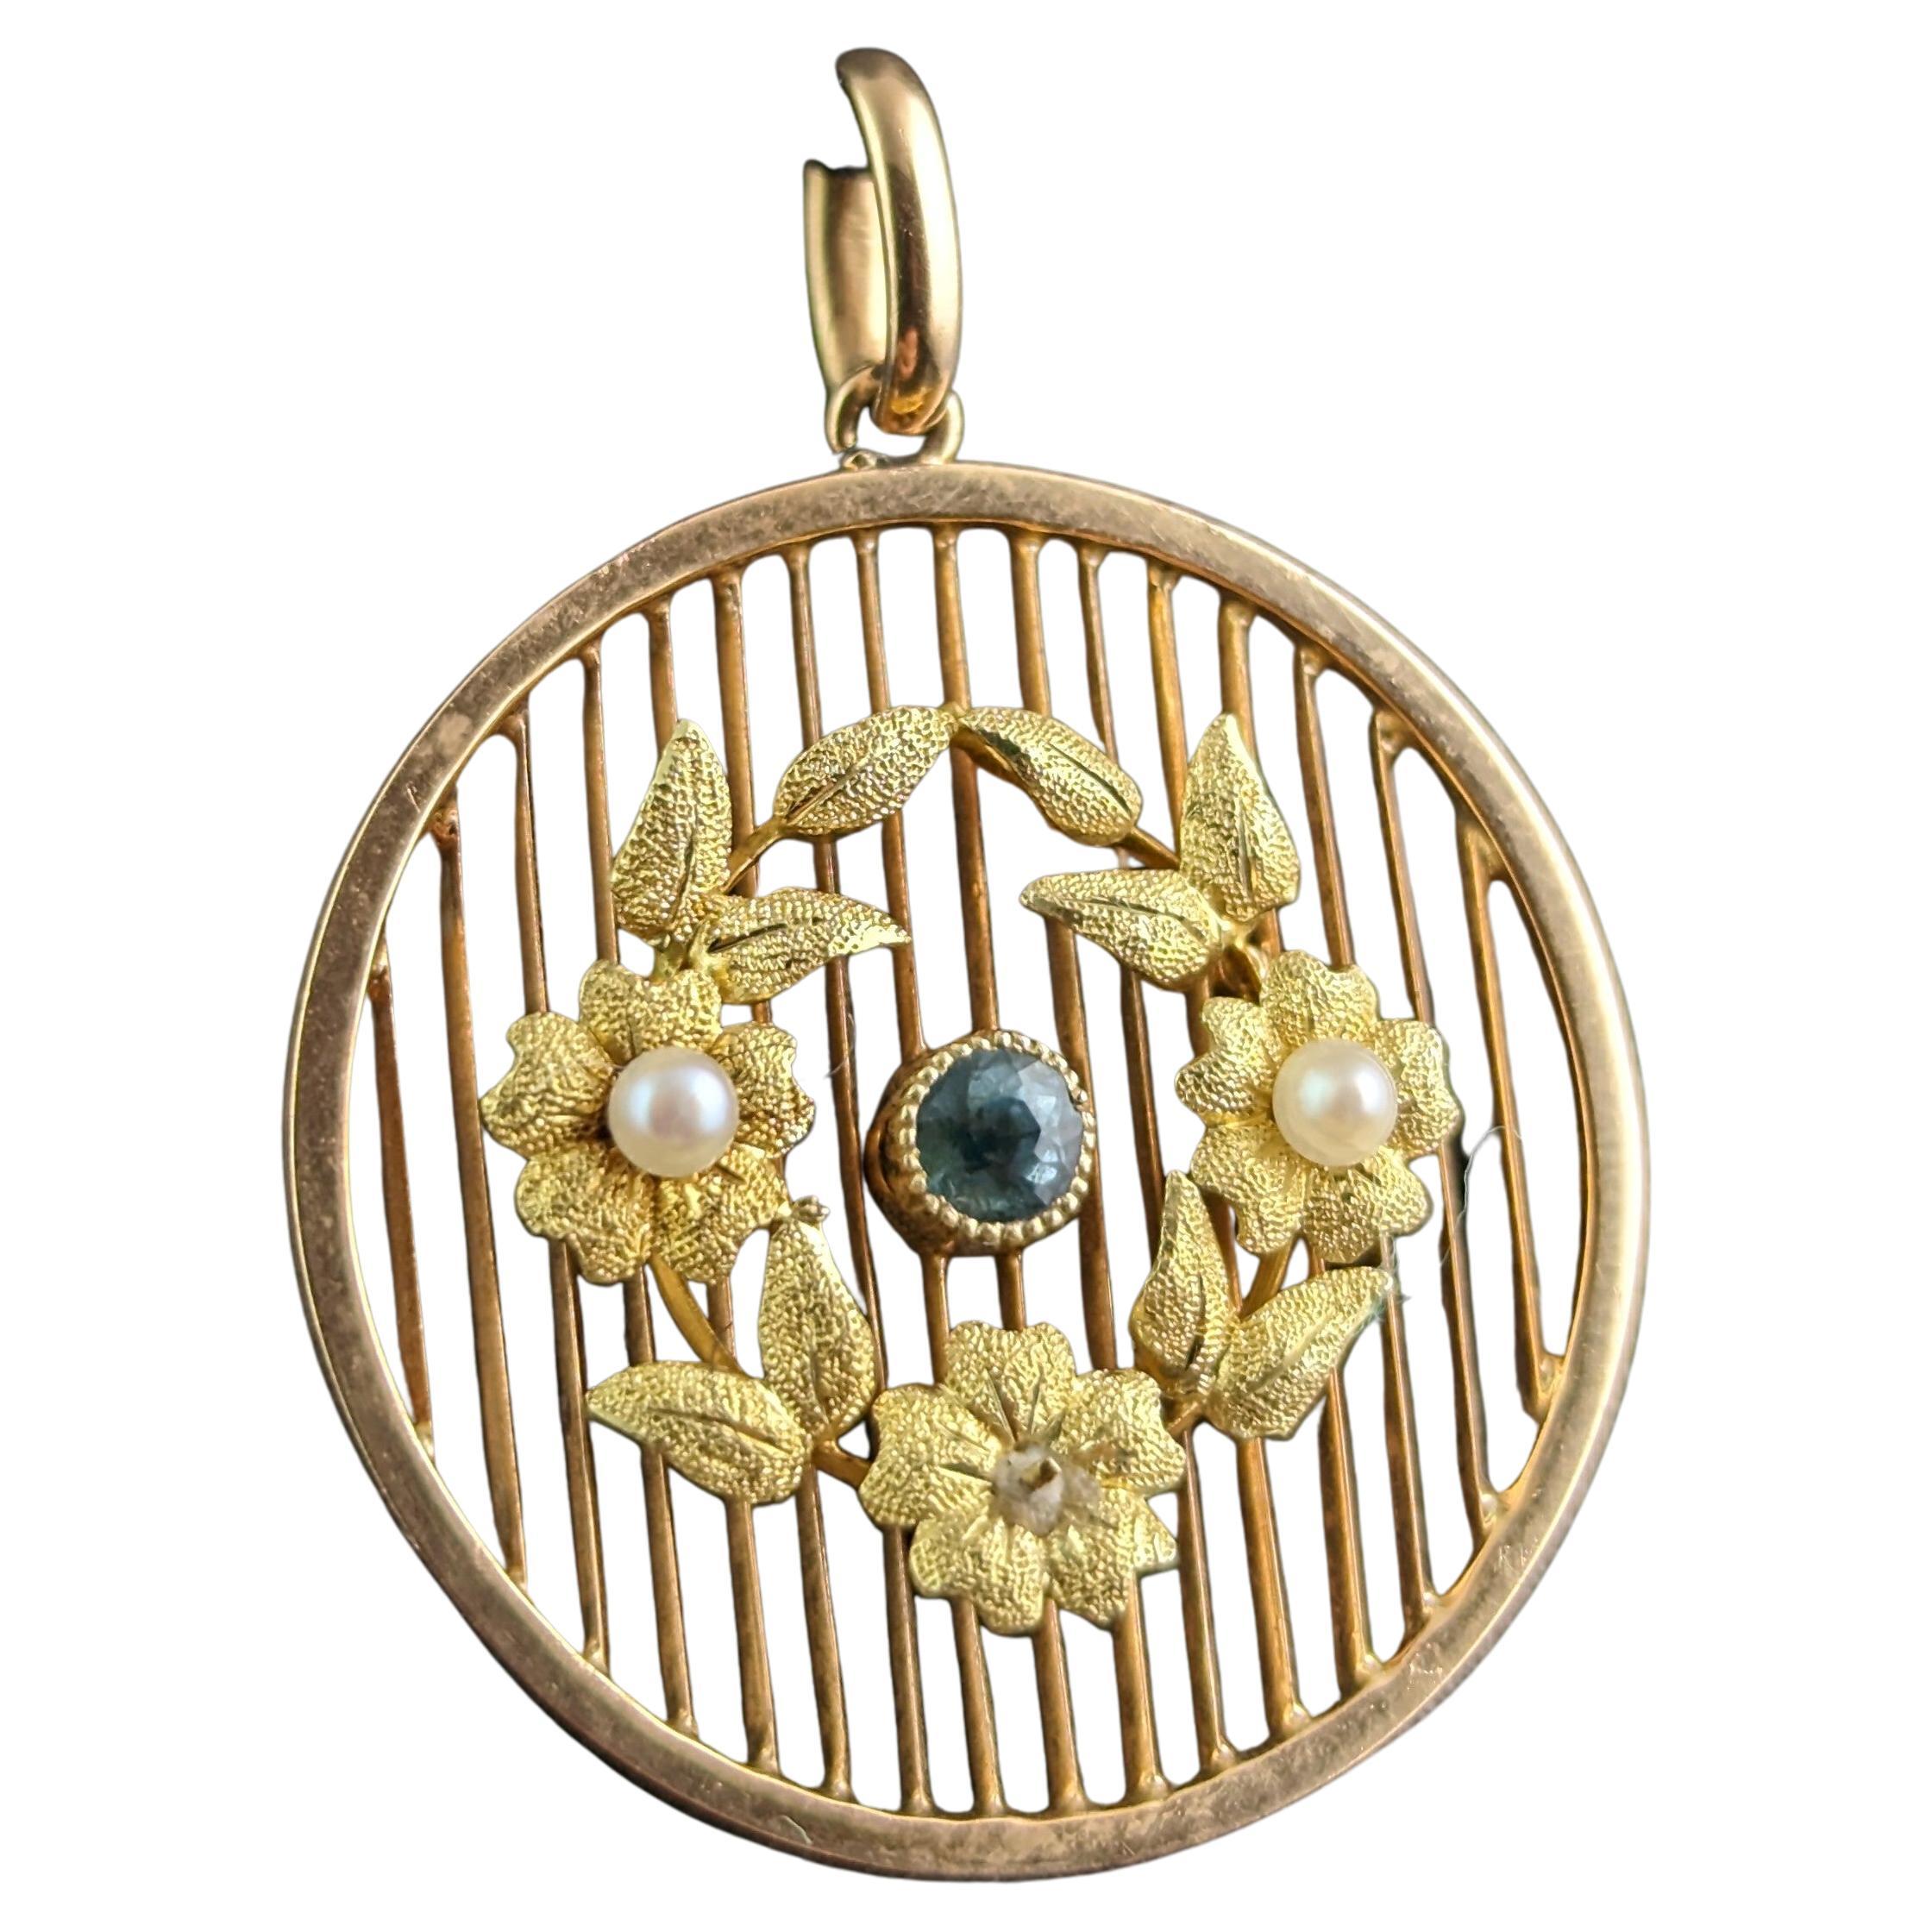 Antique Aquamarine and Pearl Pendant, 15 Karat Gold, Edwardian